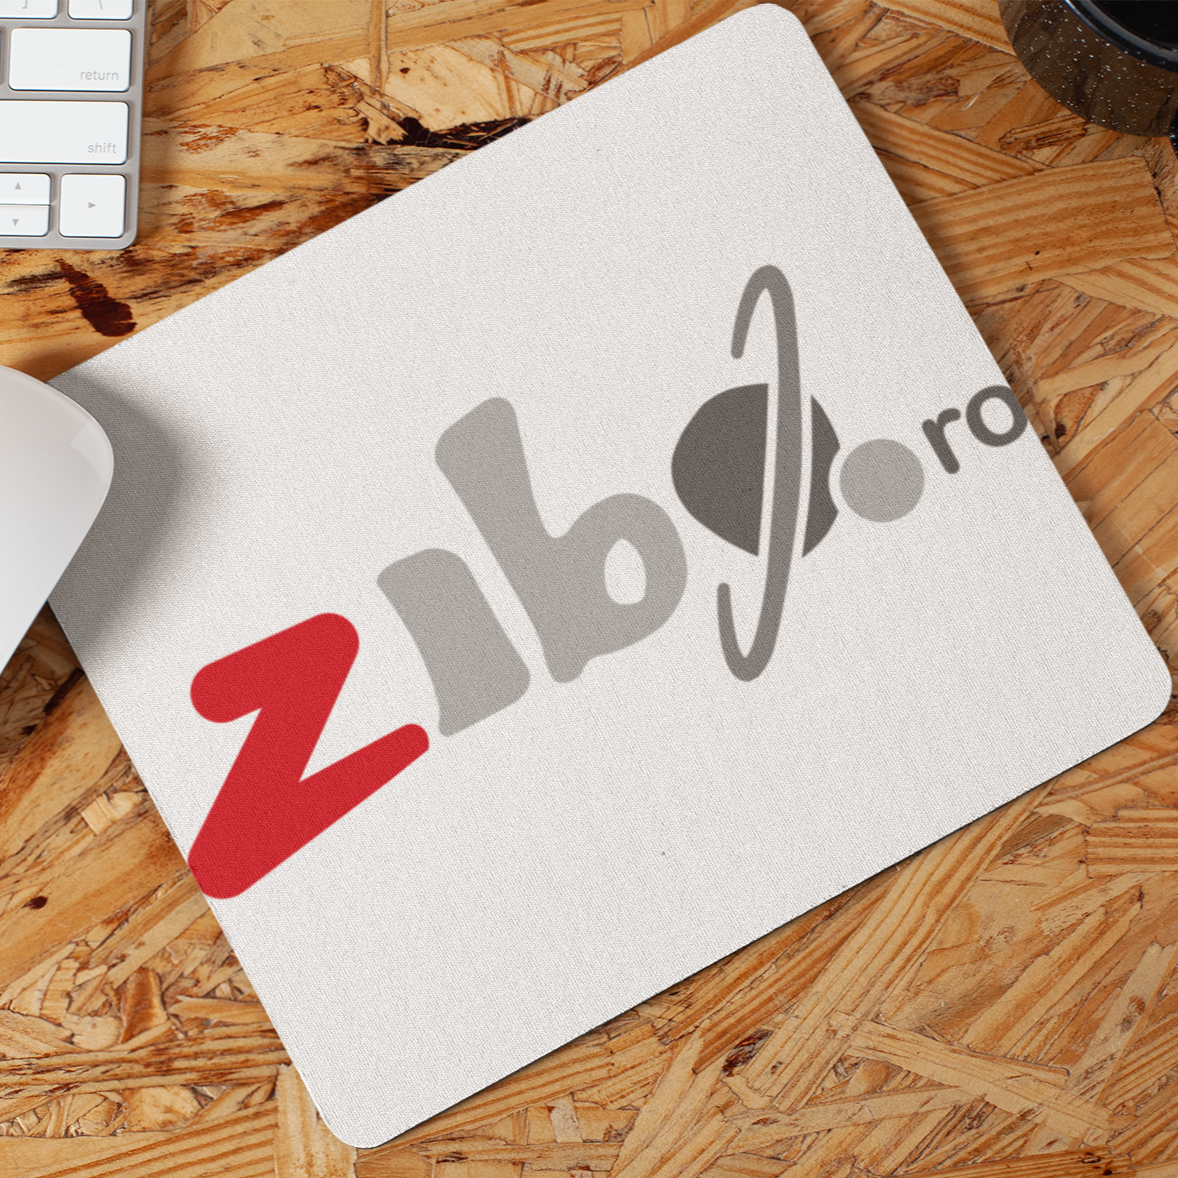 Mousepad - Zibo.ro